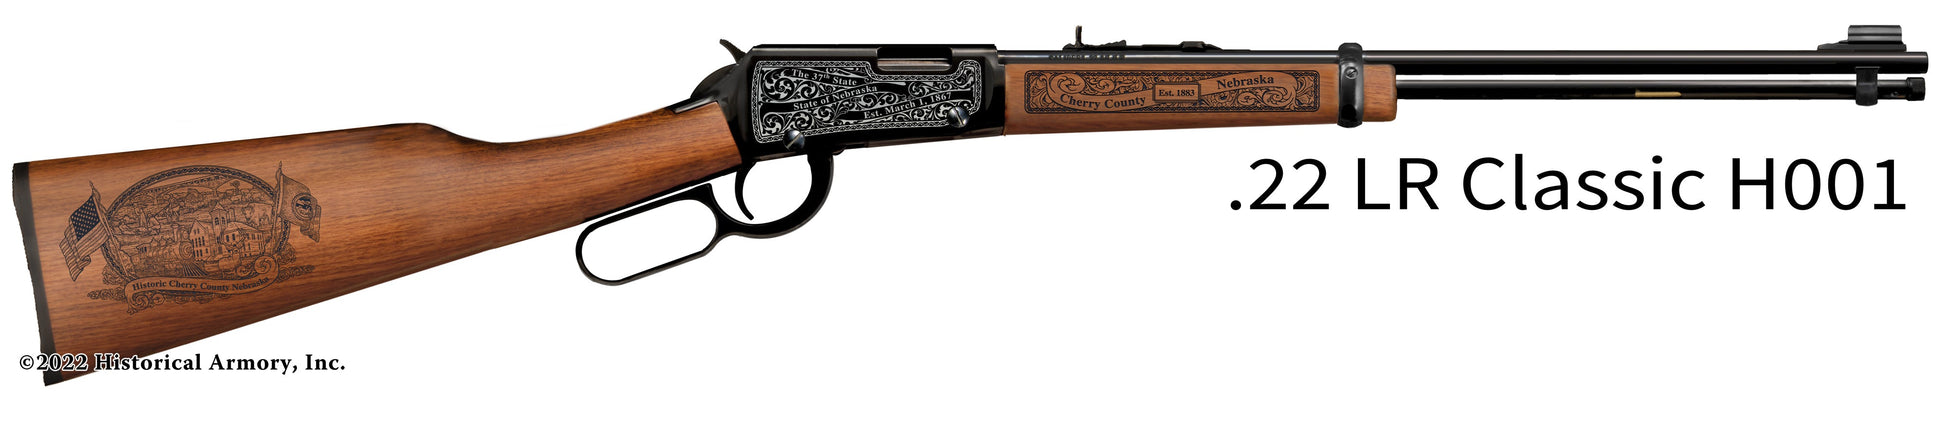 Cherry County Nebraska Engraved Henry H001 Rifle